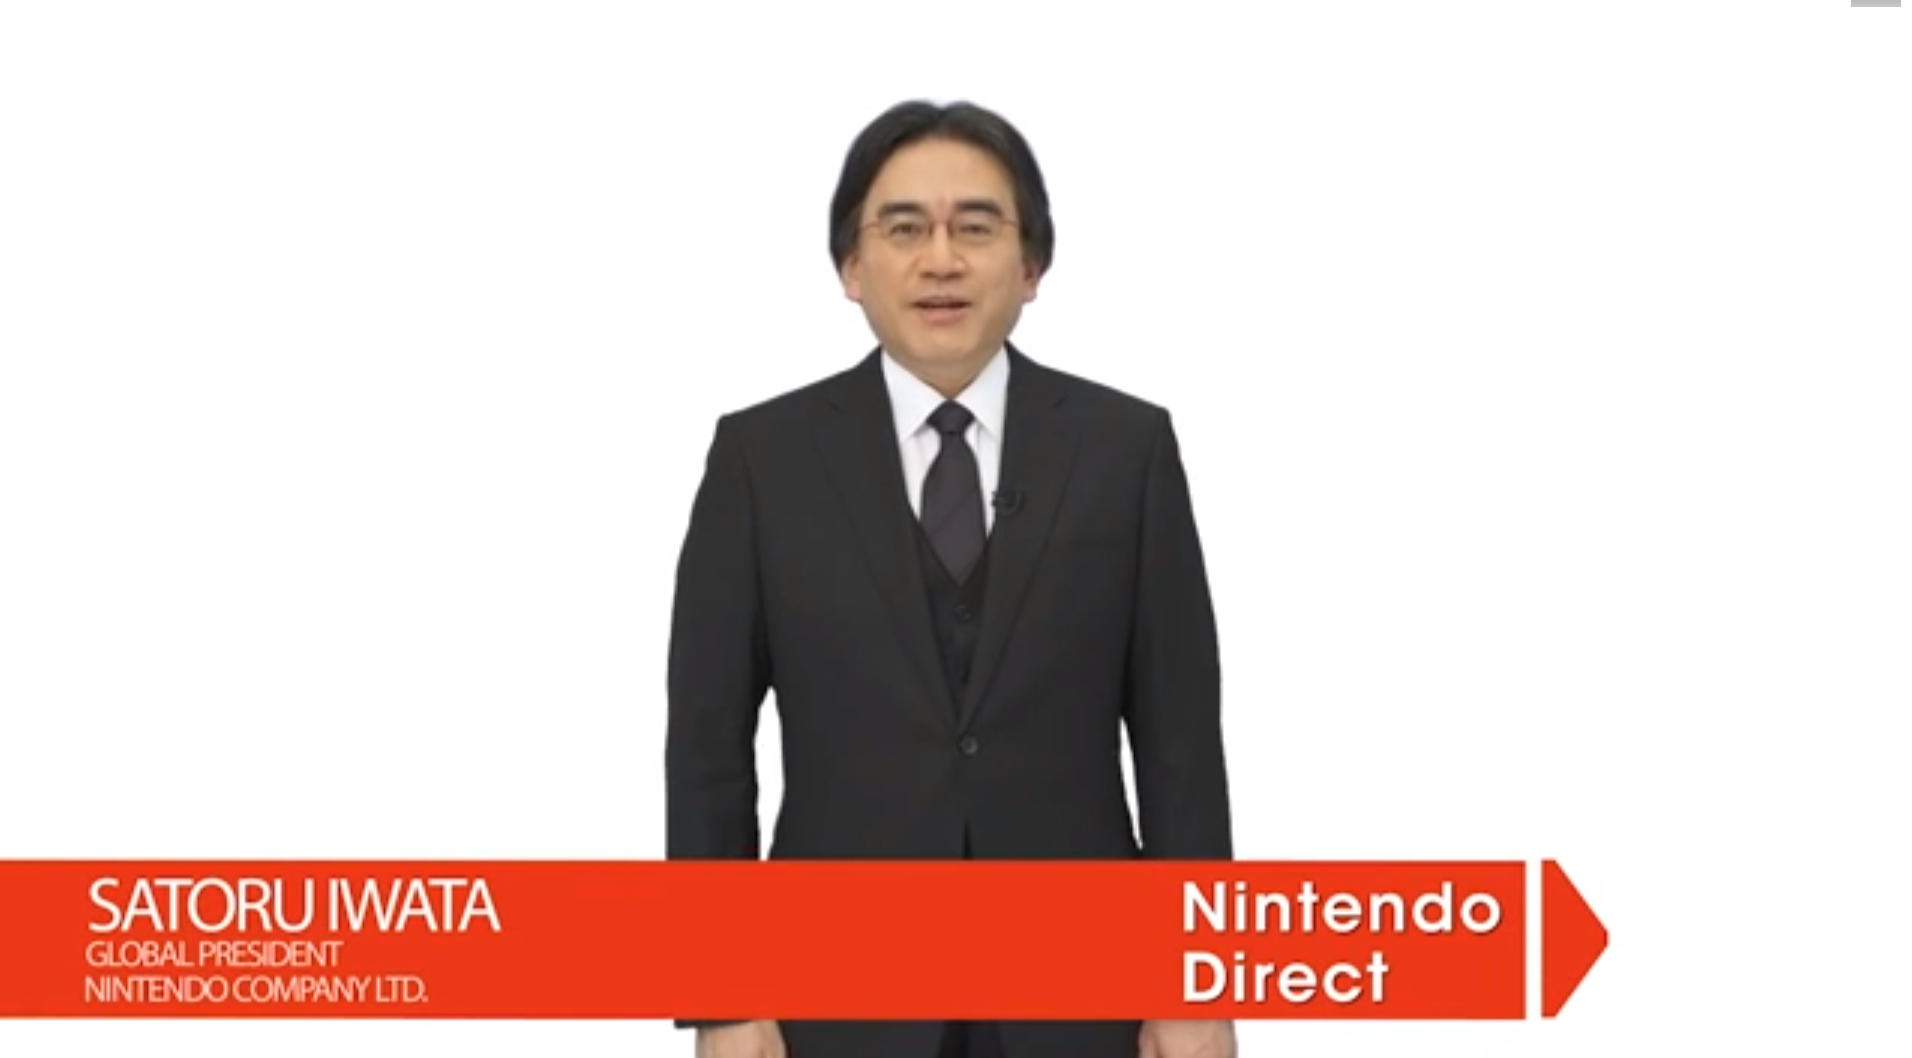 Full Oct. 1 Nintendo Direct presentations